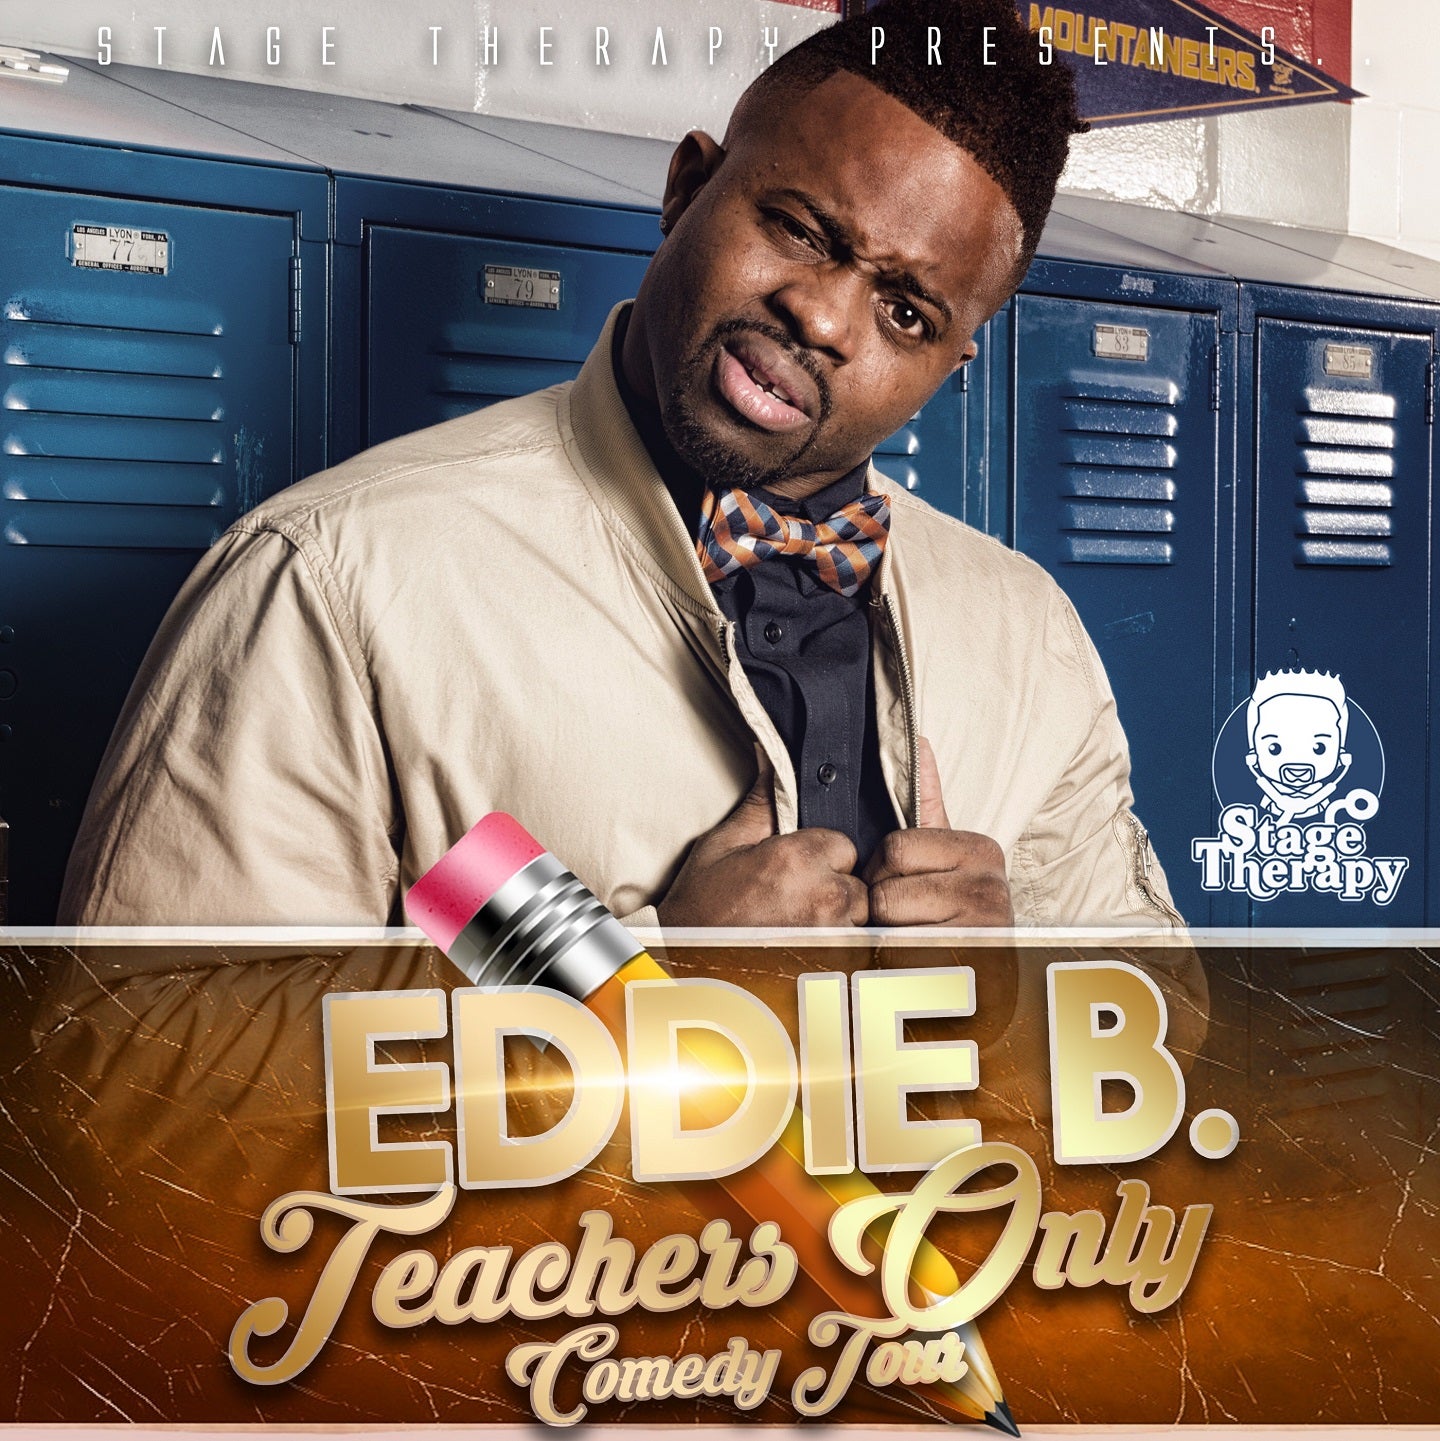 Teachers Only Comedy Tour featuring Eddie B. CarolinaTix